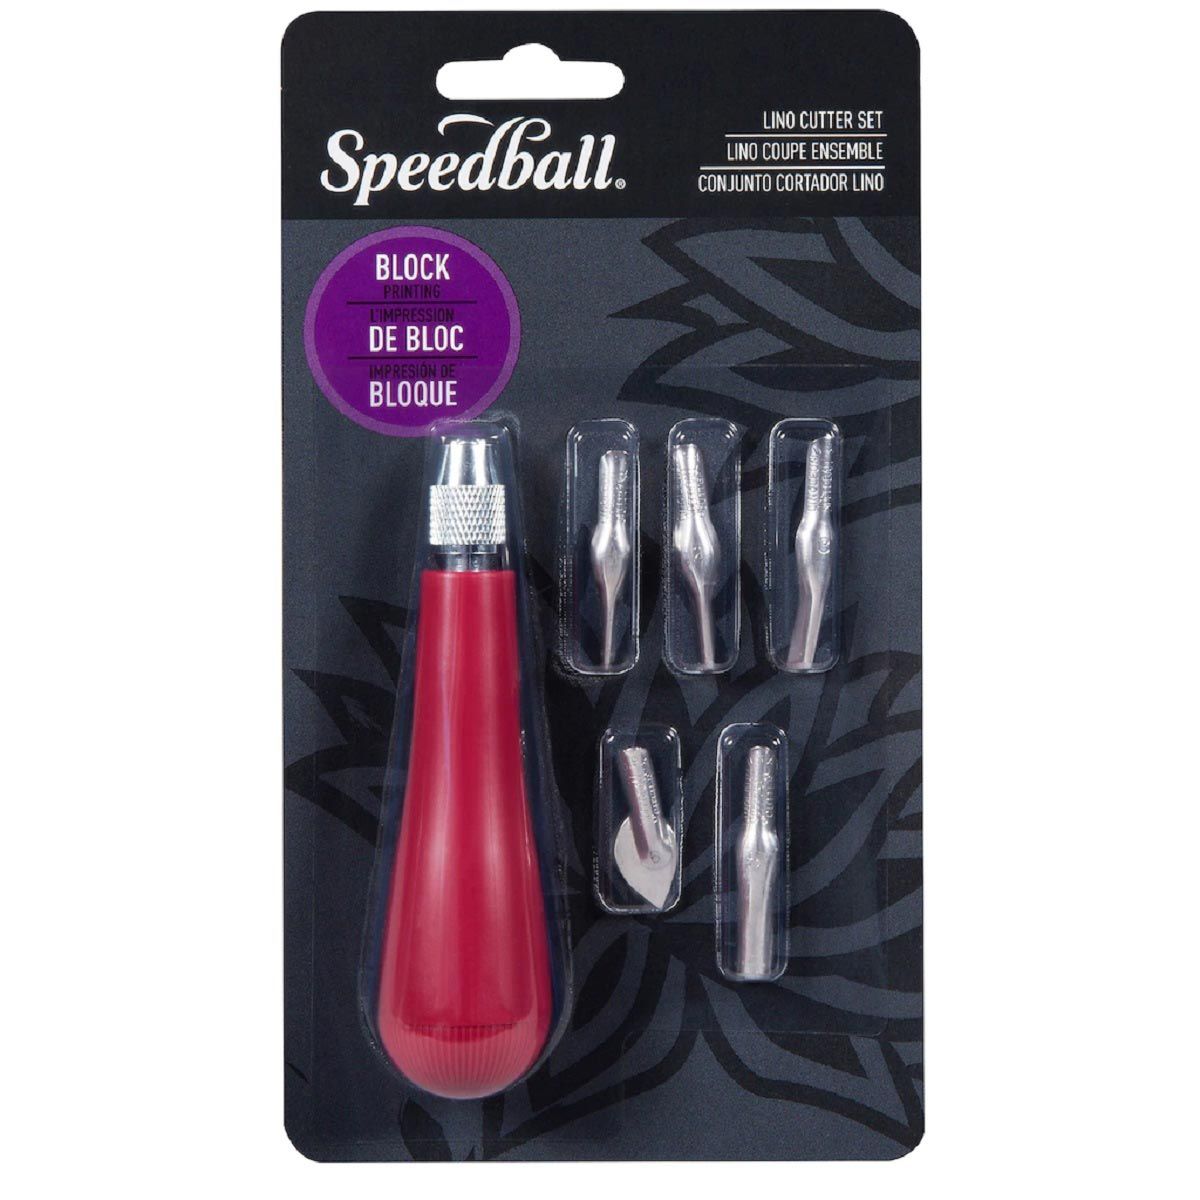 Speedball #1 Lino Set Carded